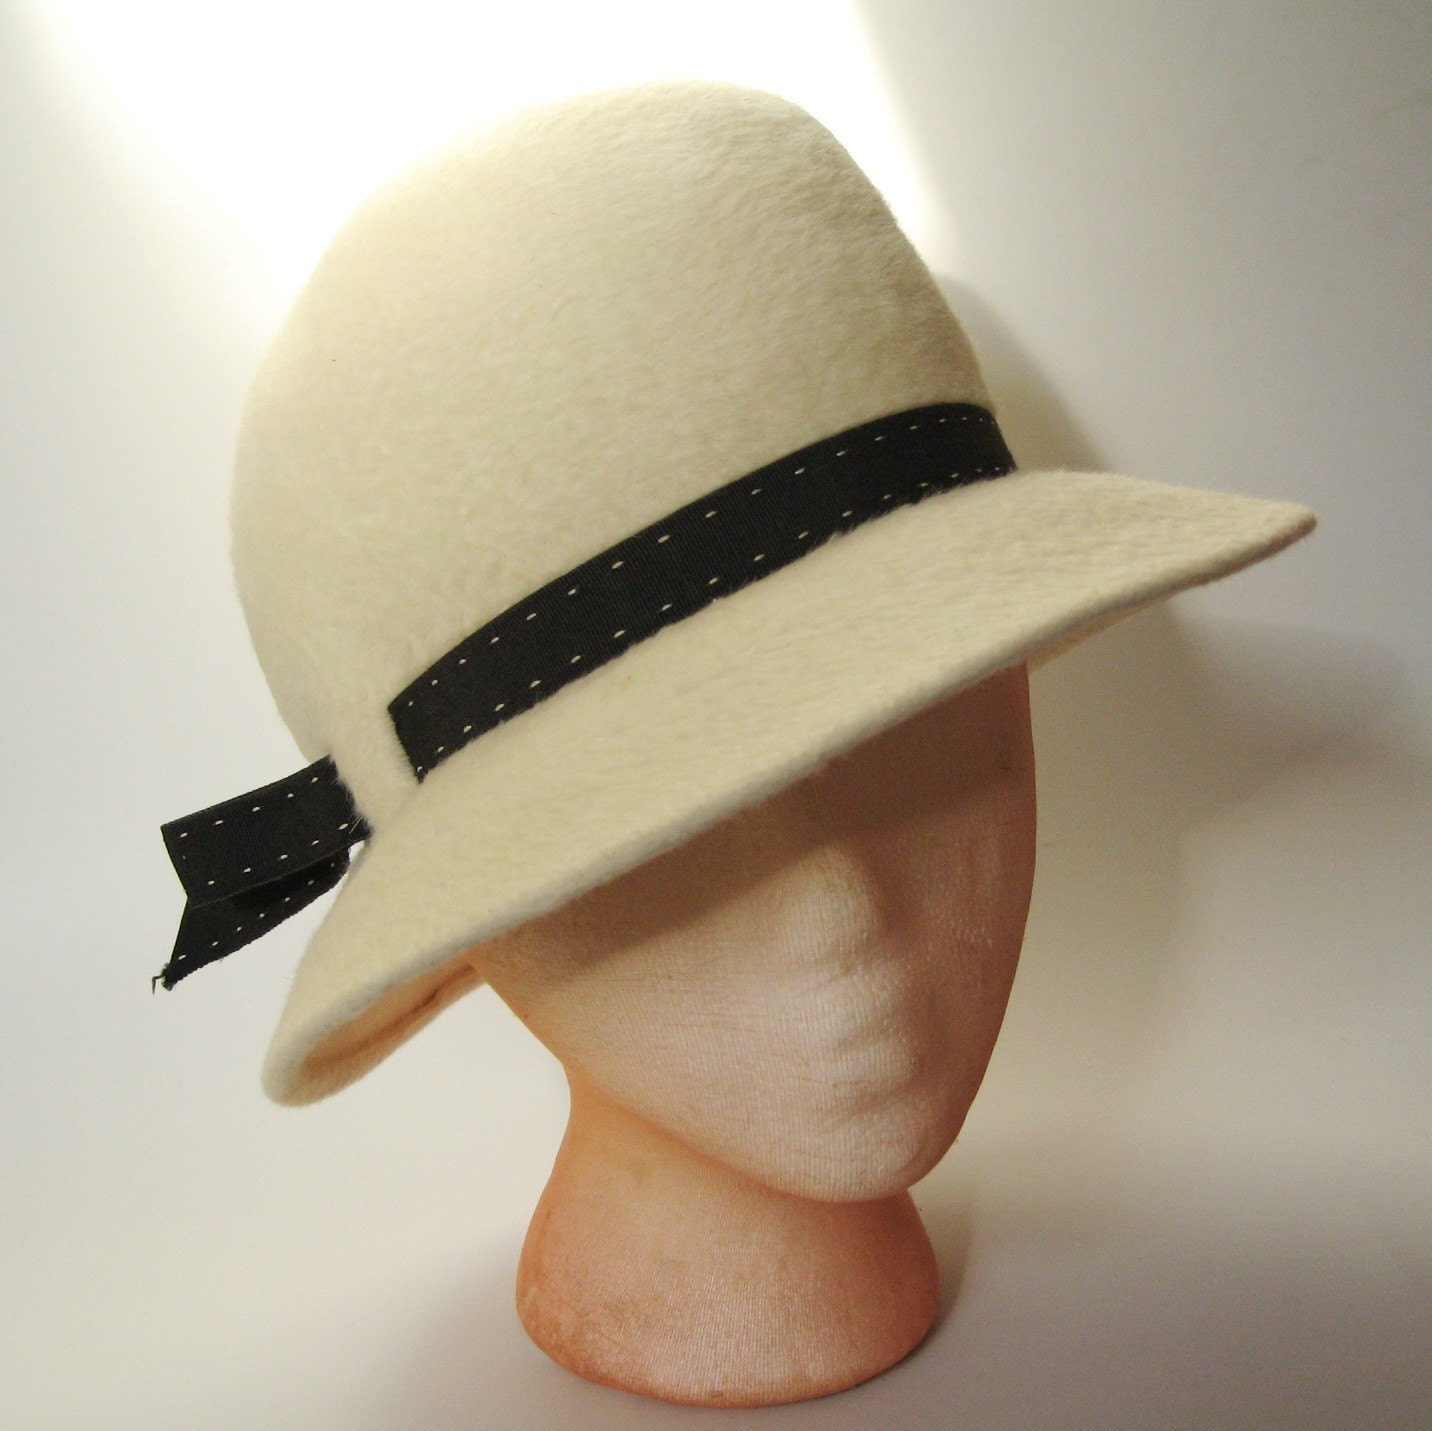 70s vintage white felt cloche hat by Anita Pineault